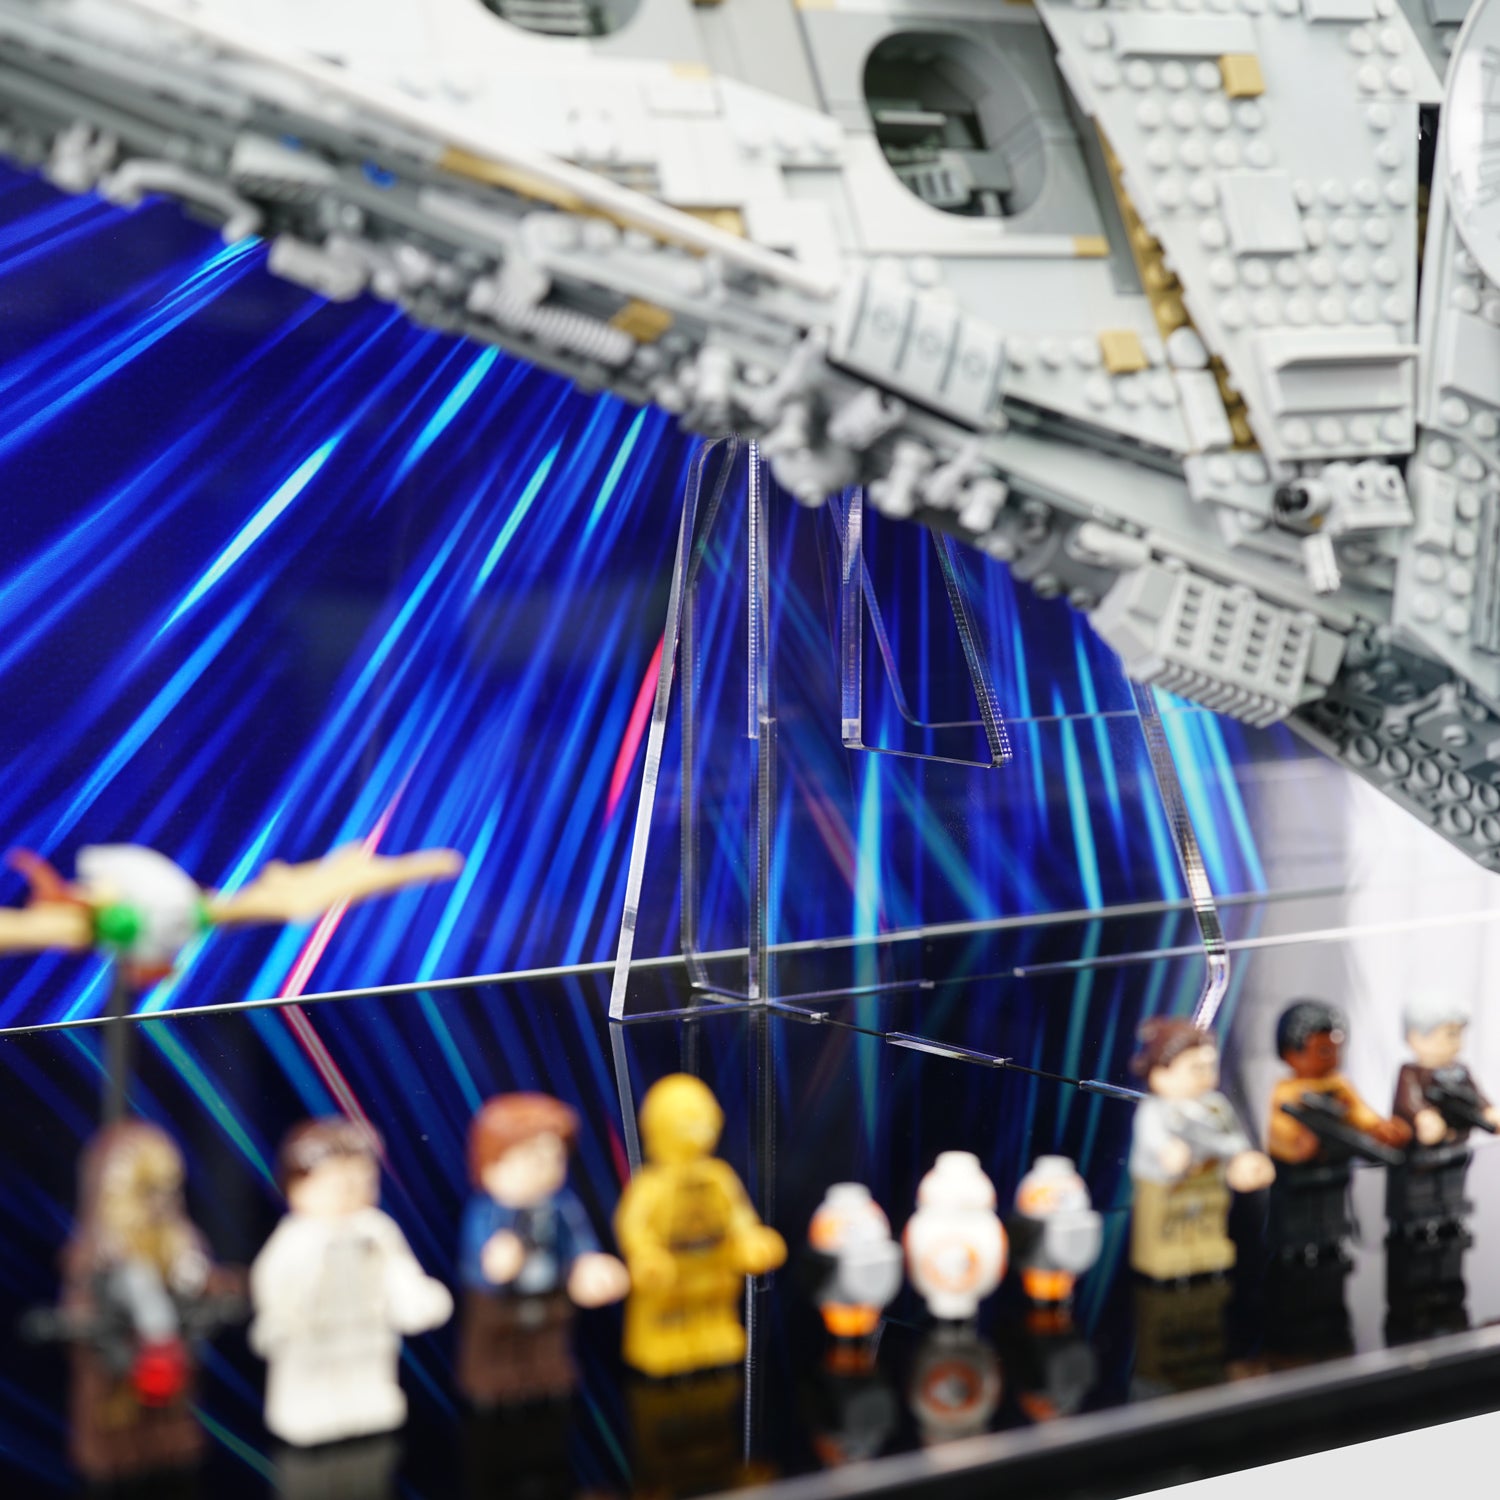 LEGO 75192 UCS Millennium Falcon (Vertical) Display Case | ONBRICK